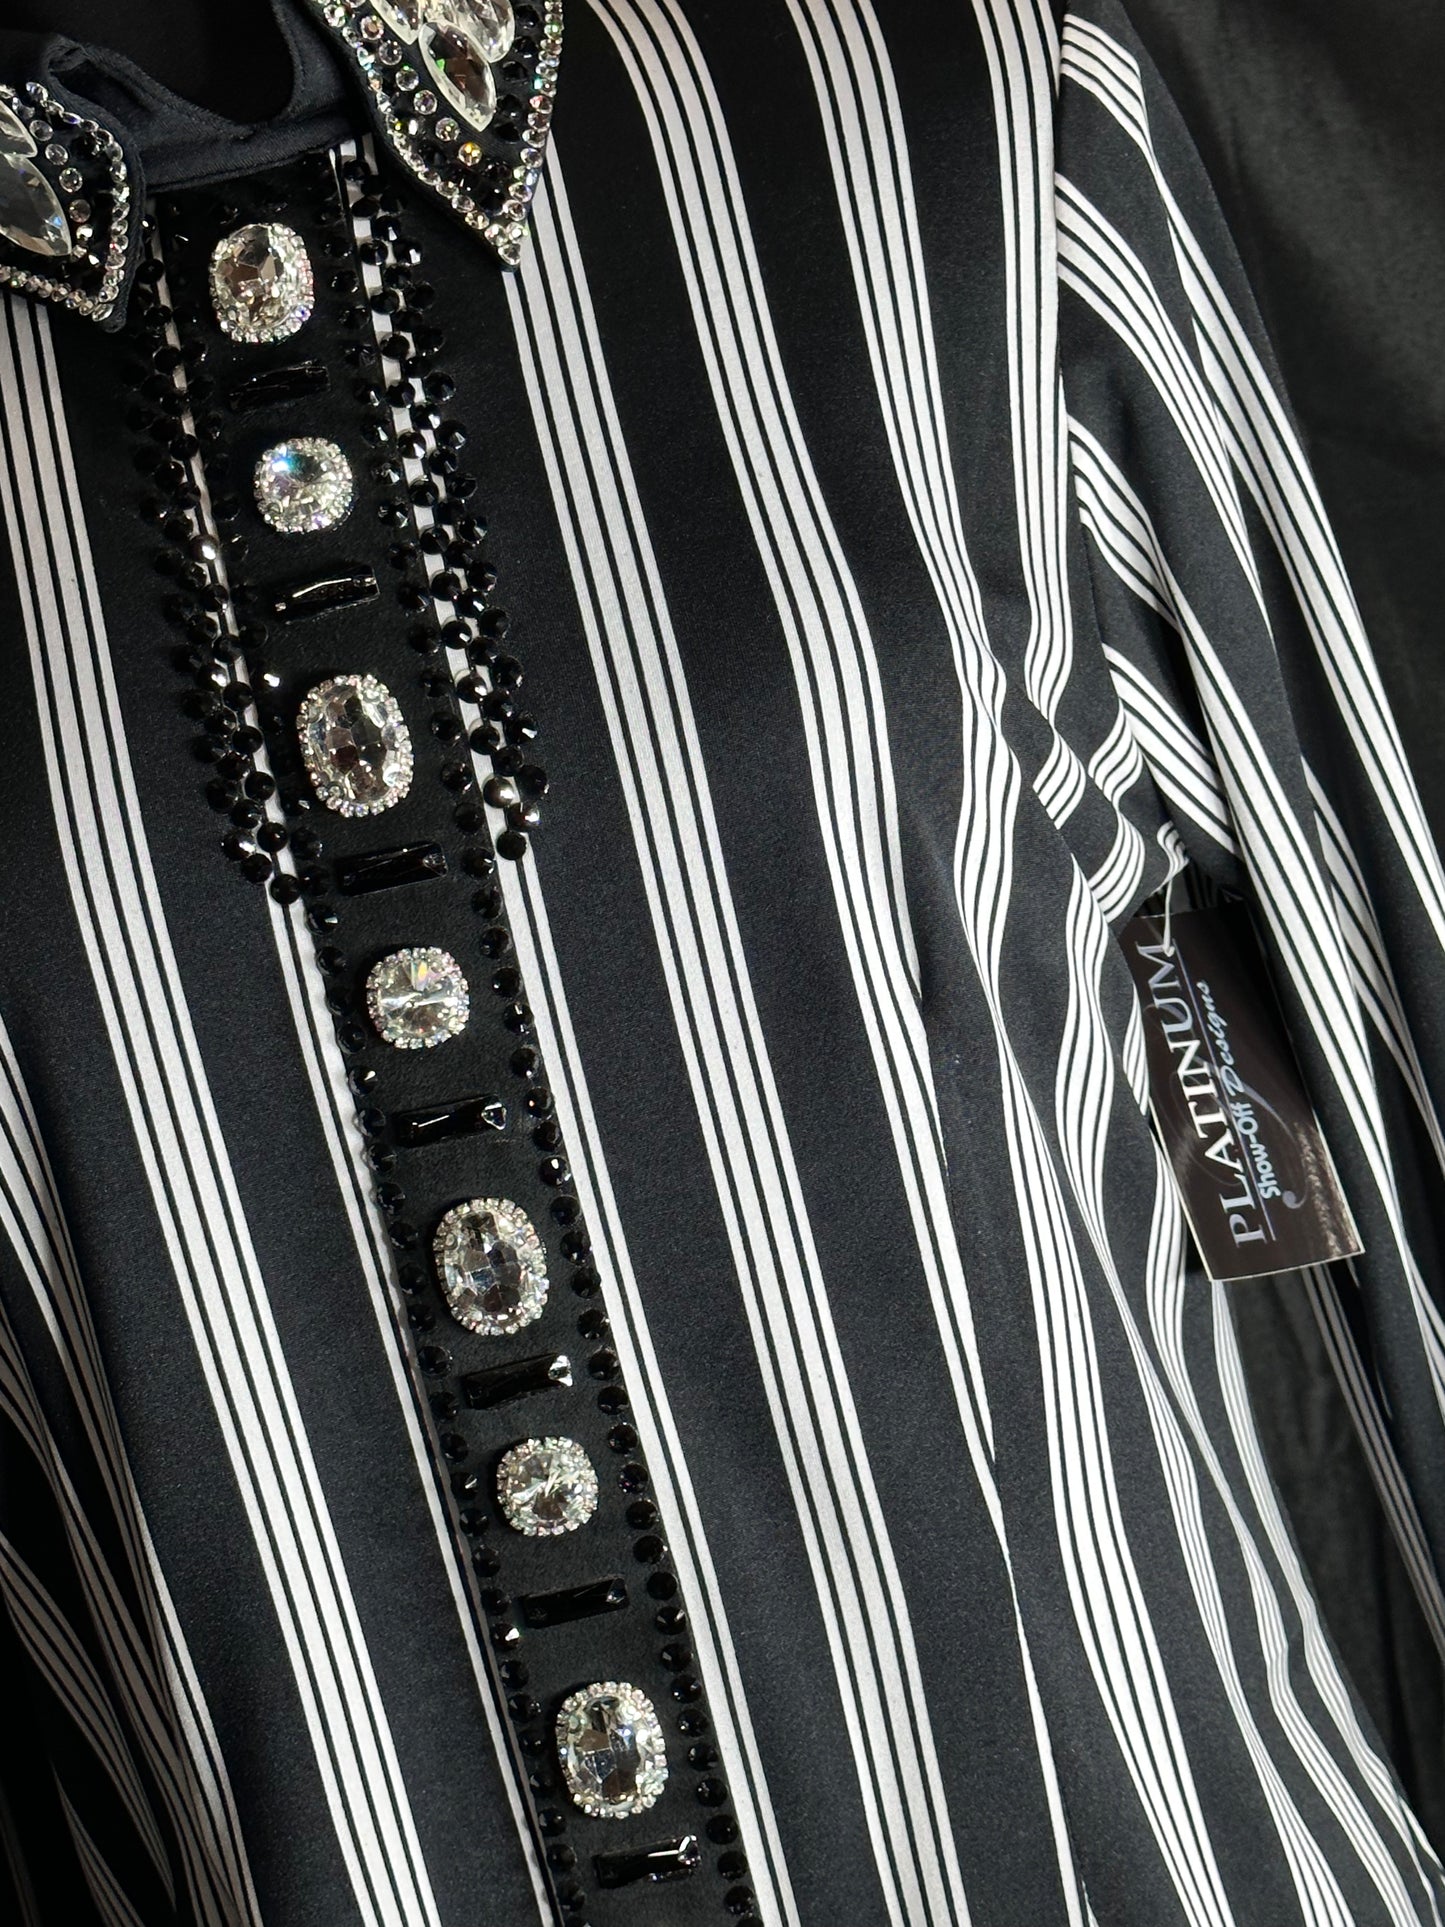 Size large back zip day shirt black and white stripe